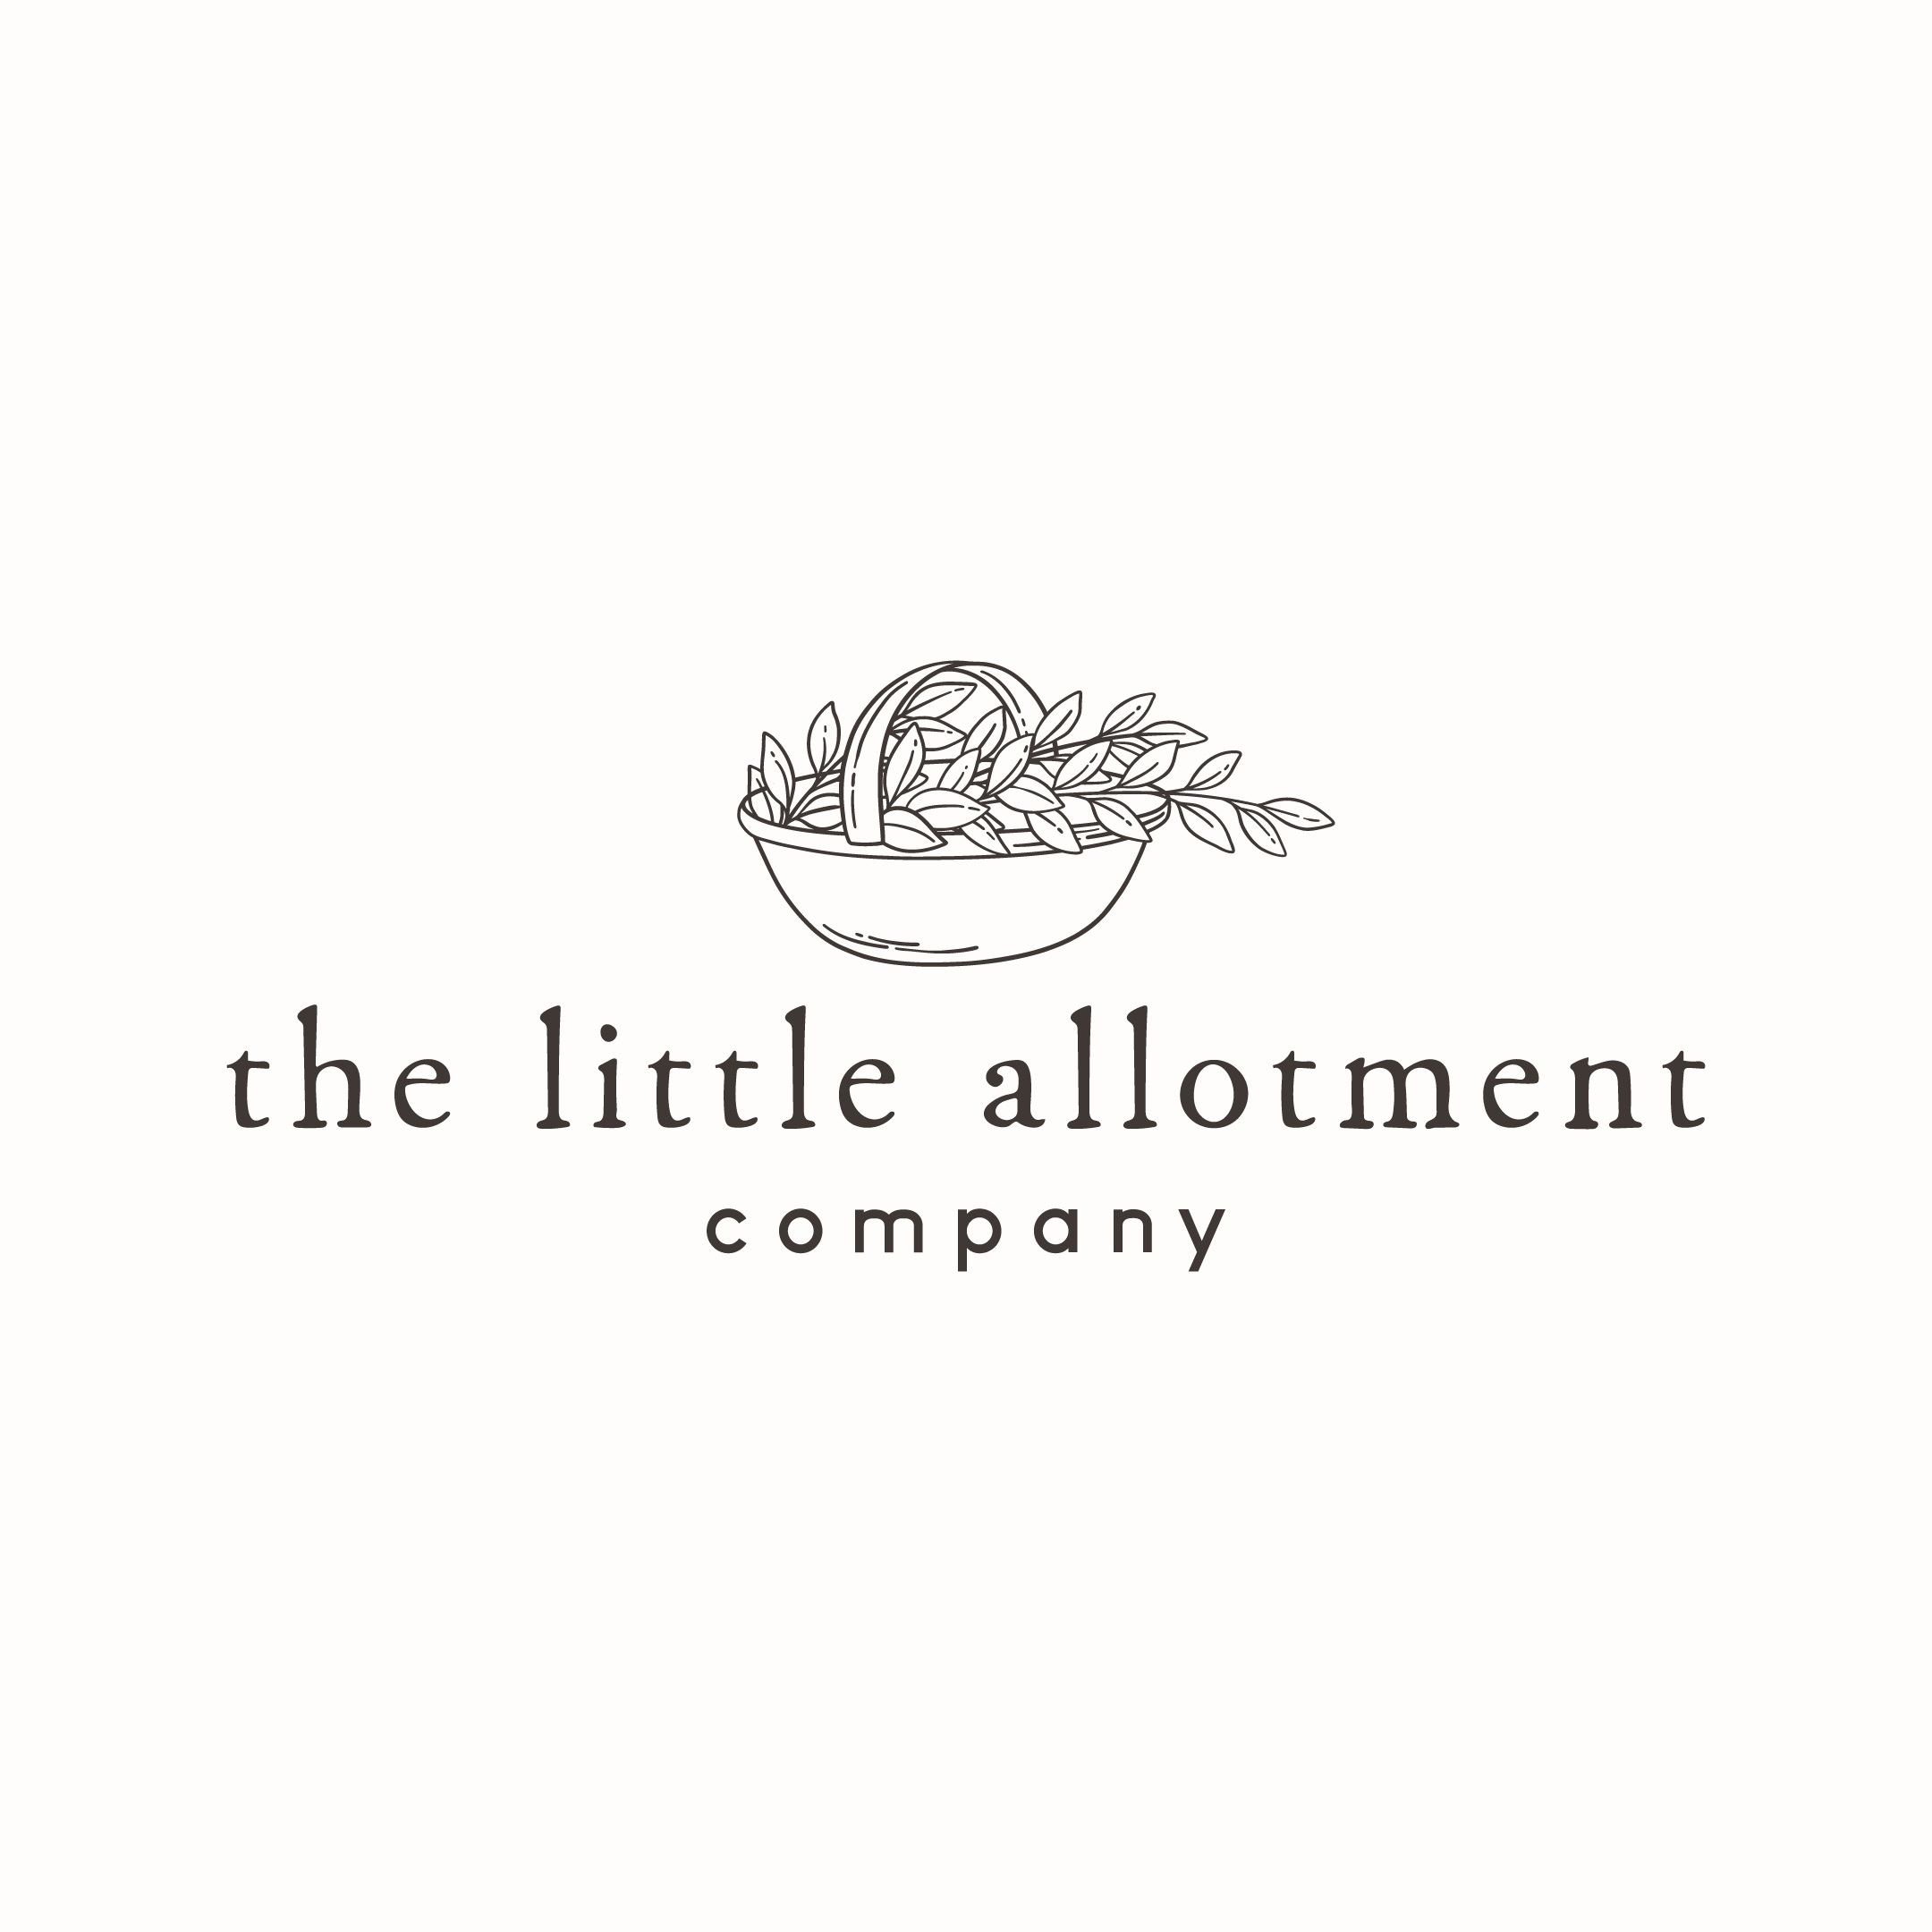 Little Allotment - Social -  -1.png